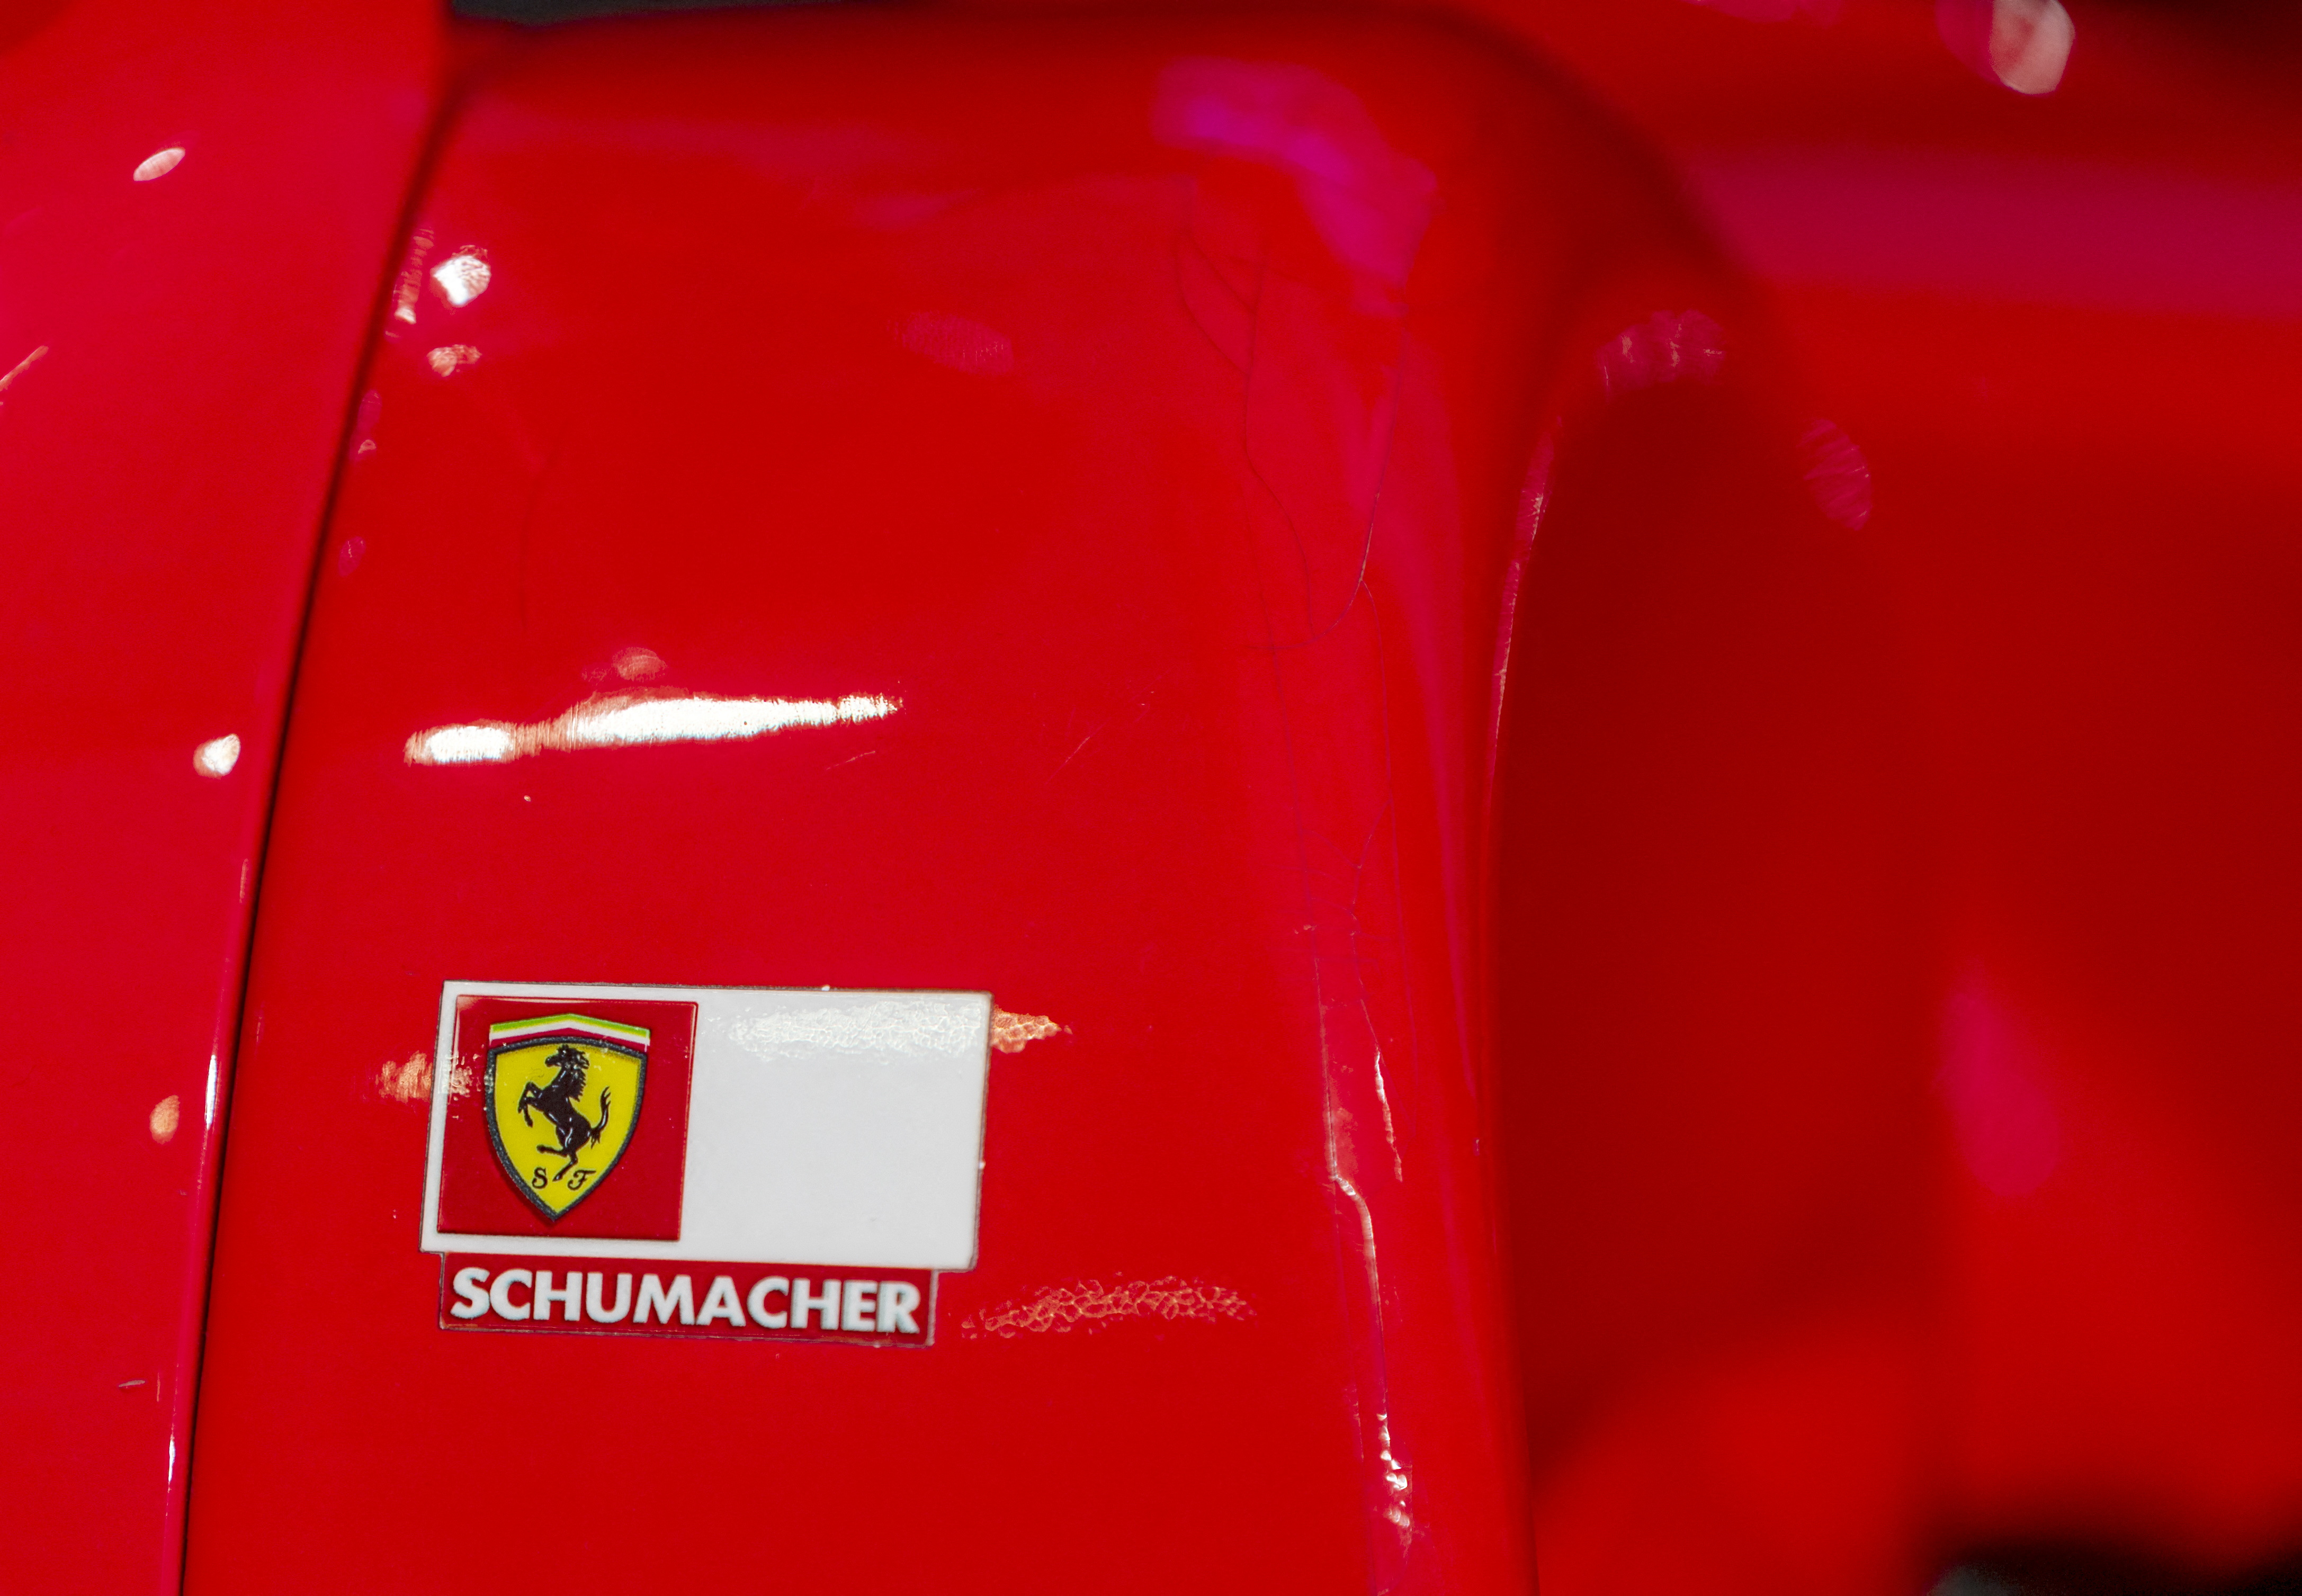 Schumacher F1 Ferrari preview at Sotheby's in Geneva